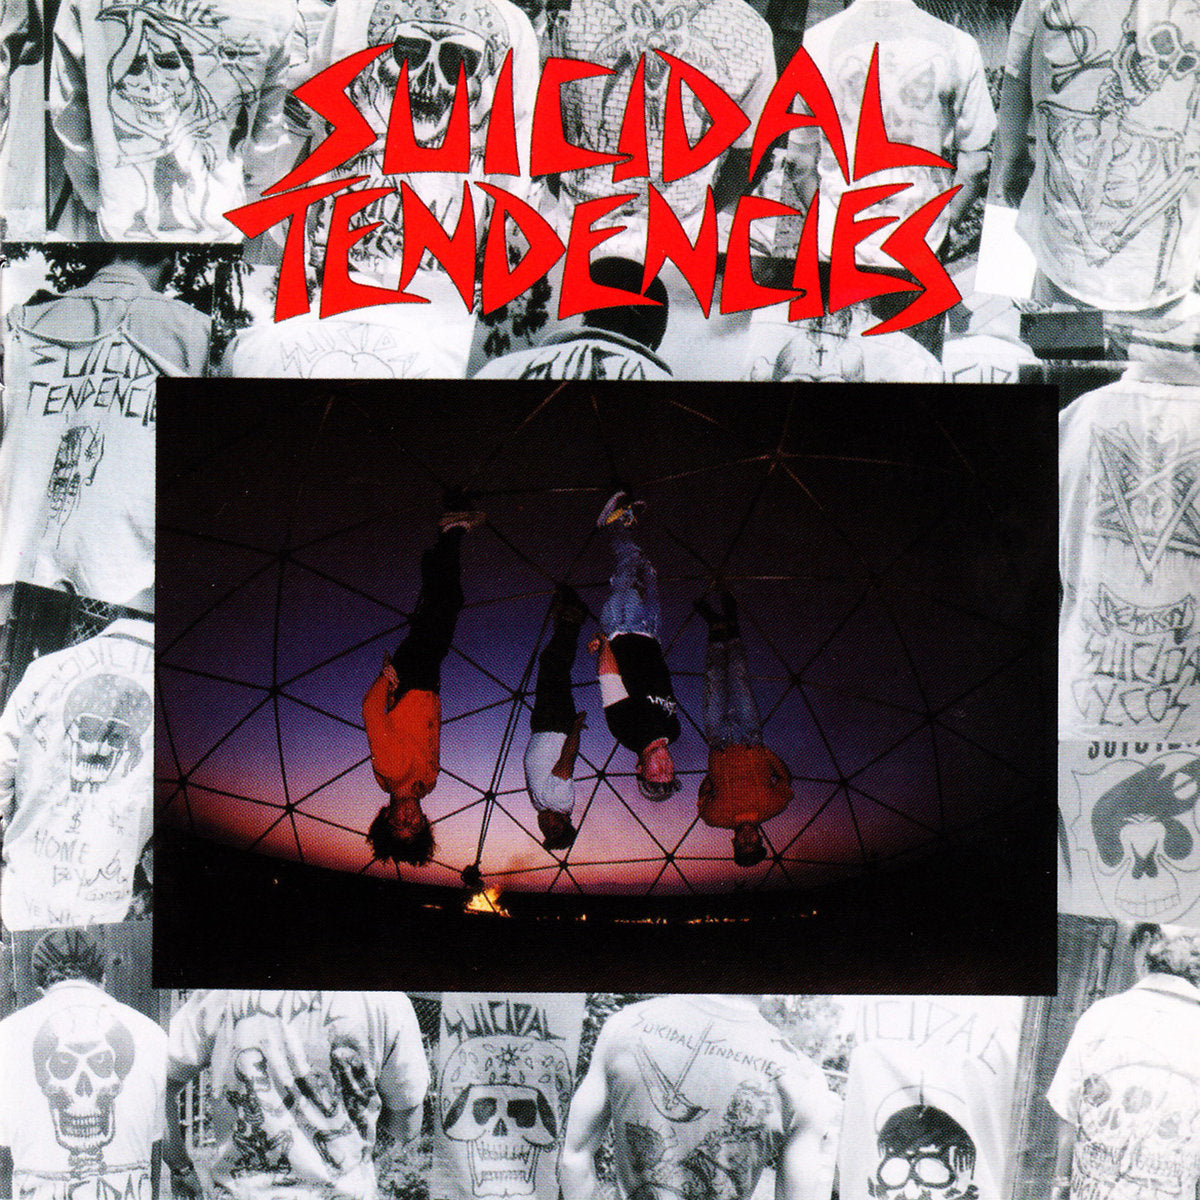 Suicidal Tendencies "s/t" CD